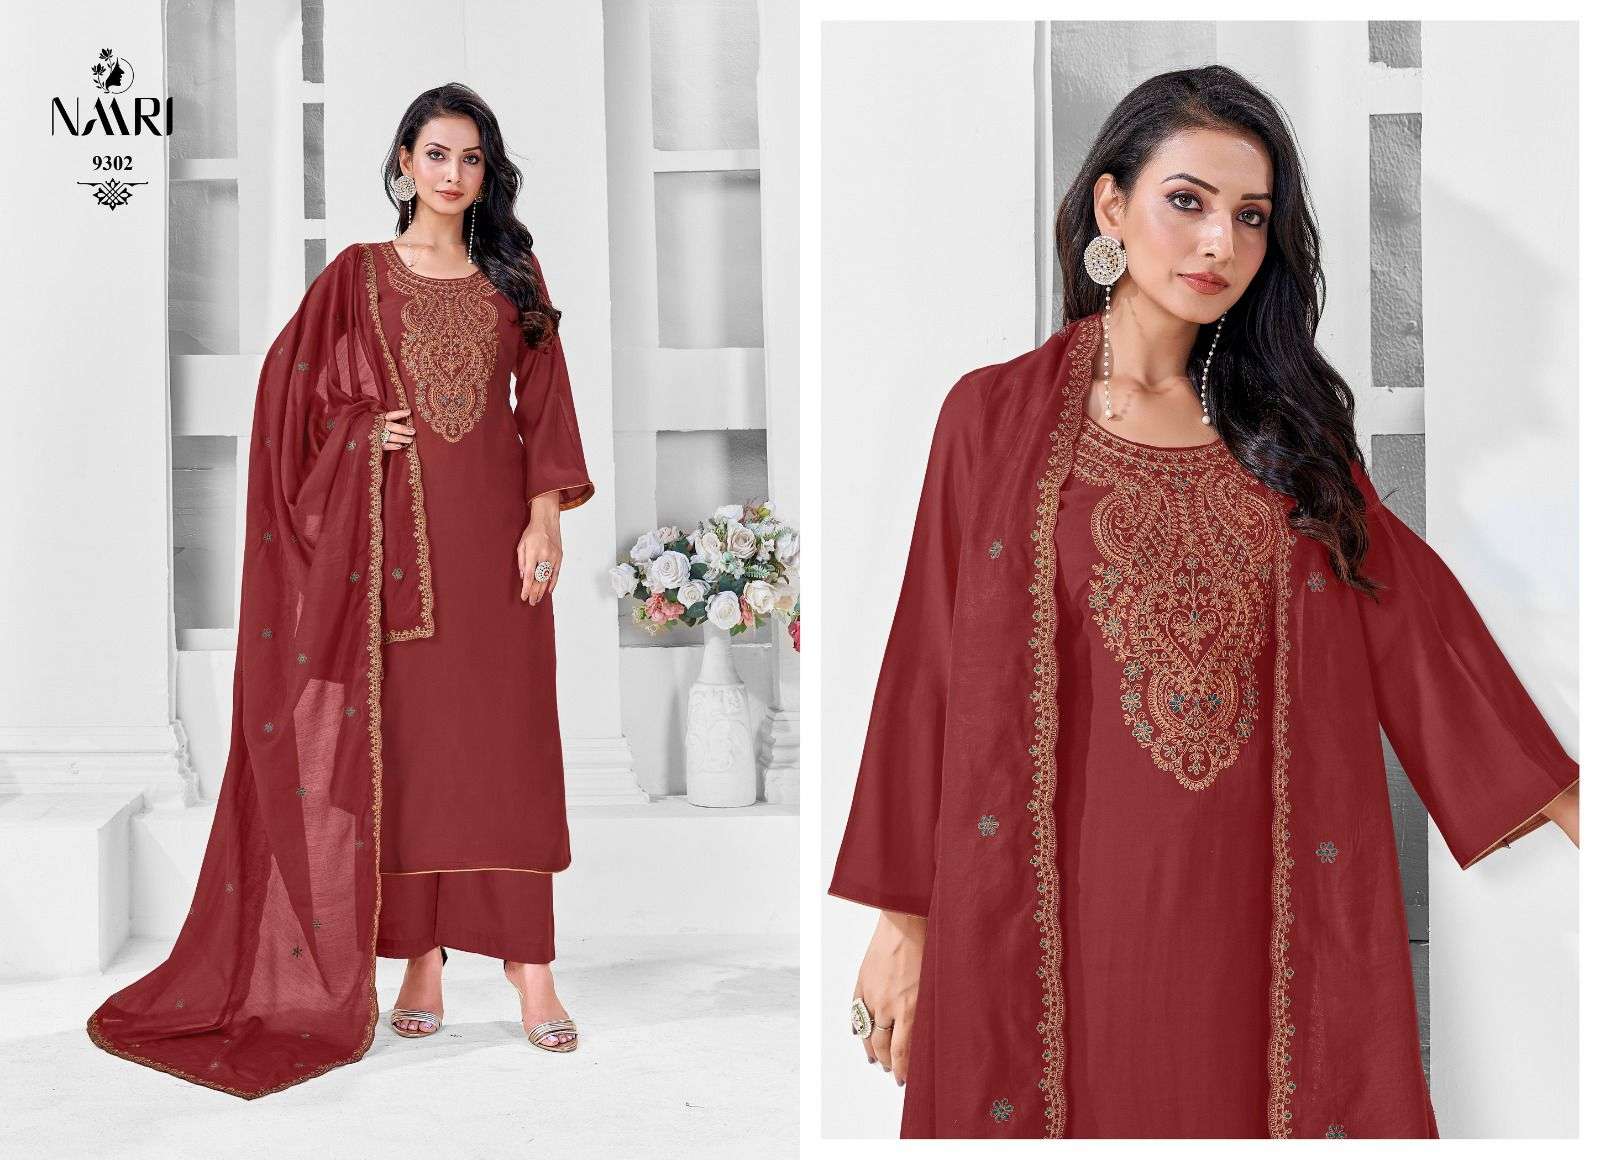 naari ayuri pure silk 9301-9304 series latest fancy salwar kameez wholesaler surat gujarat